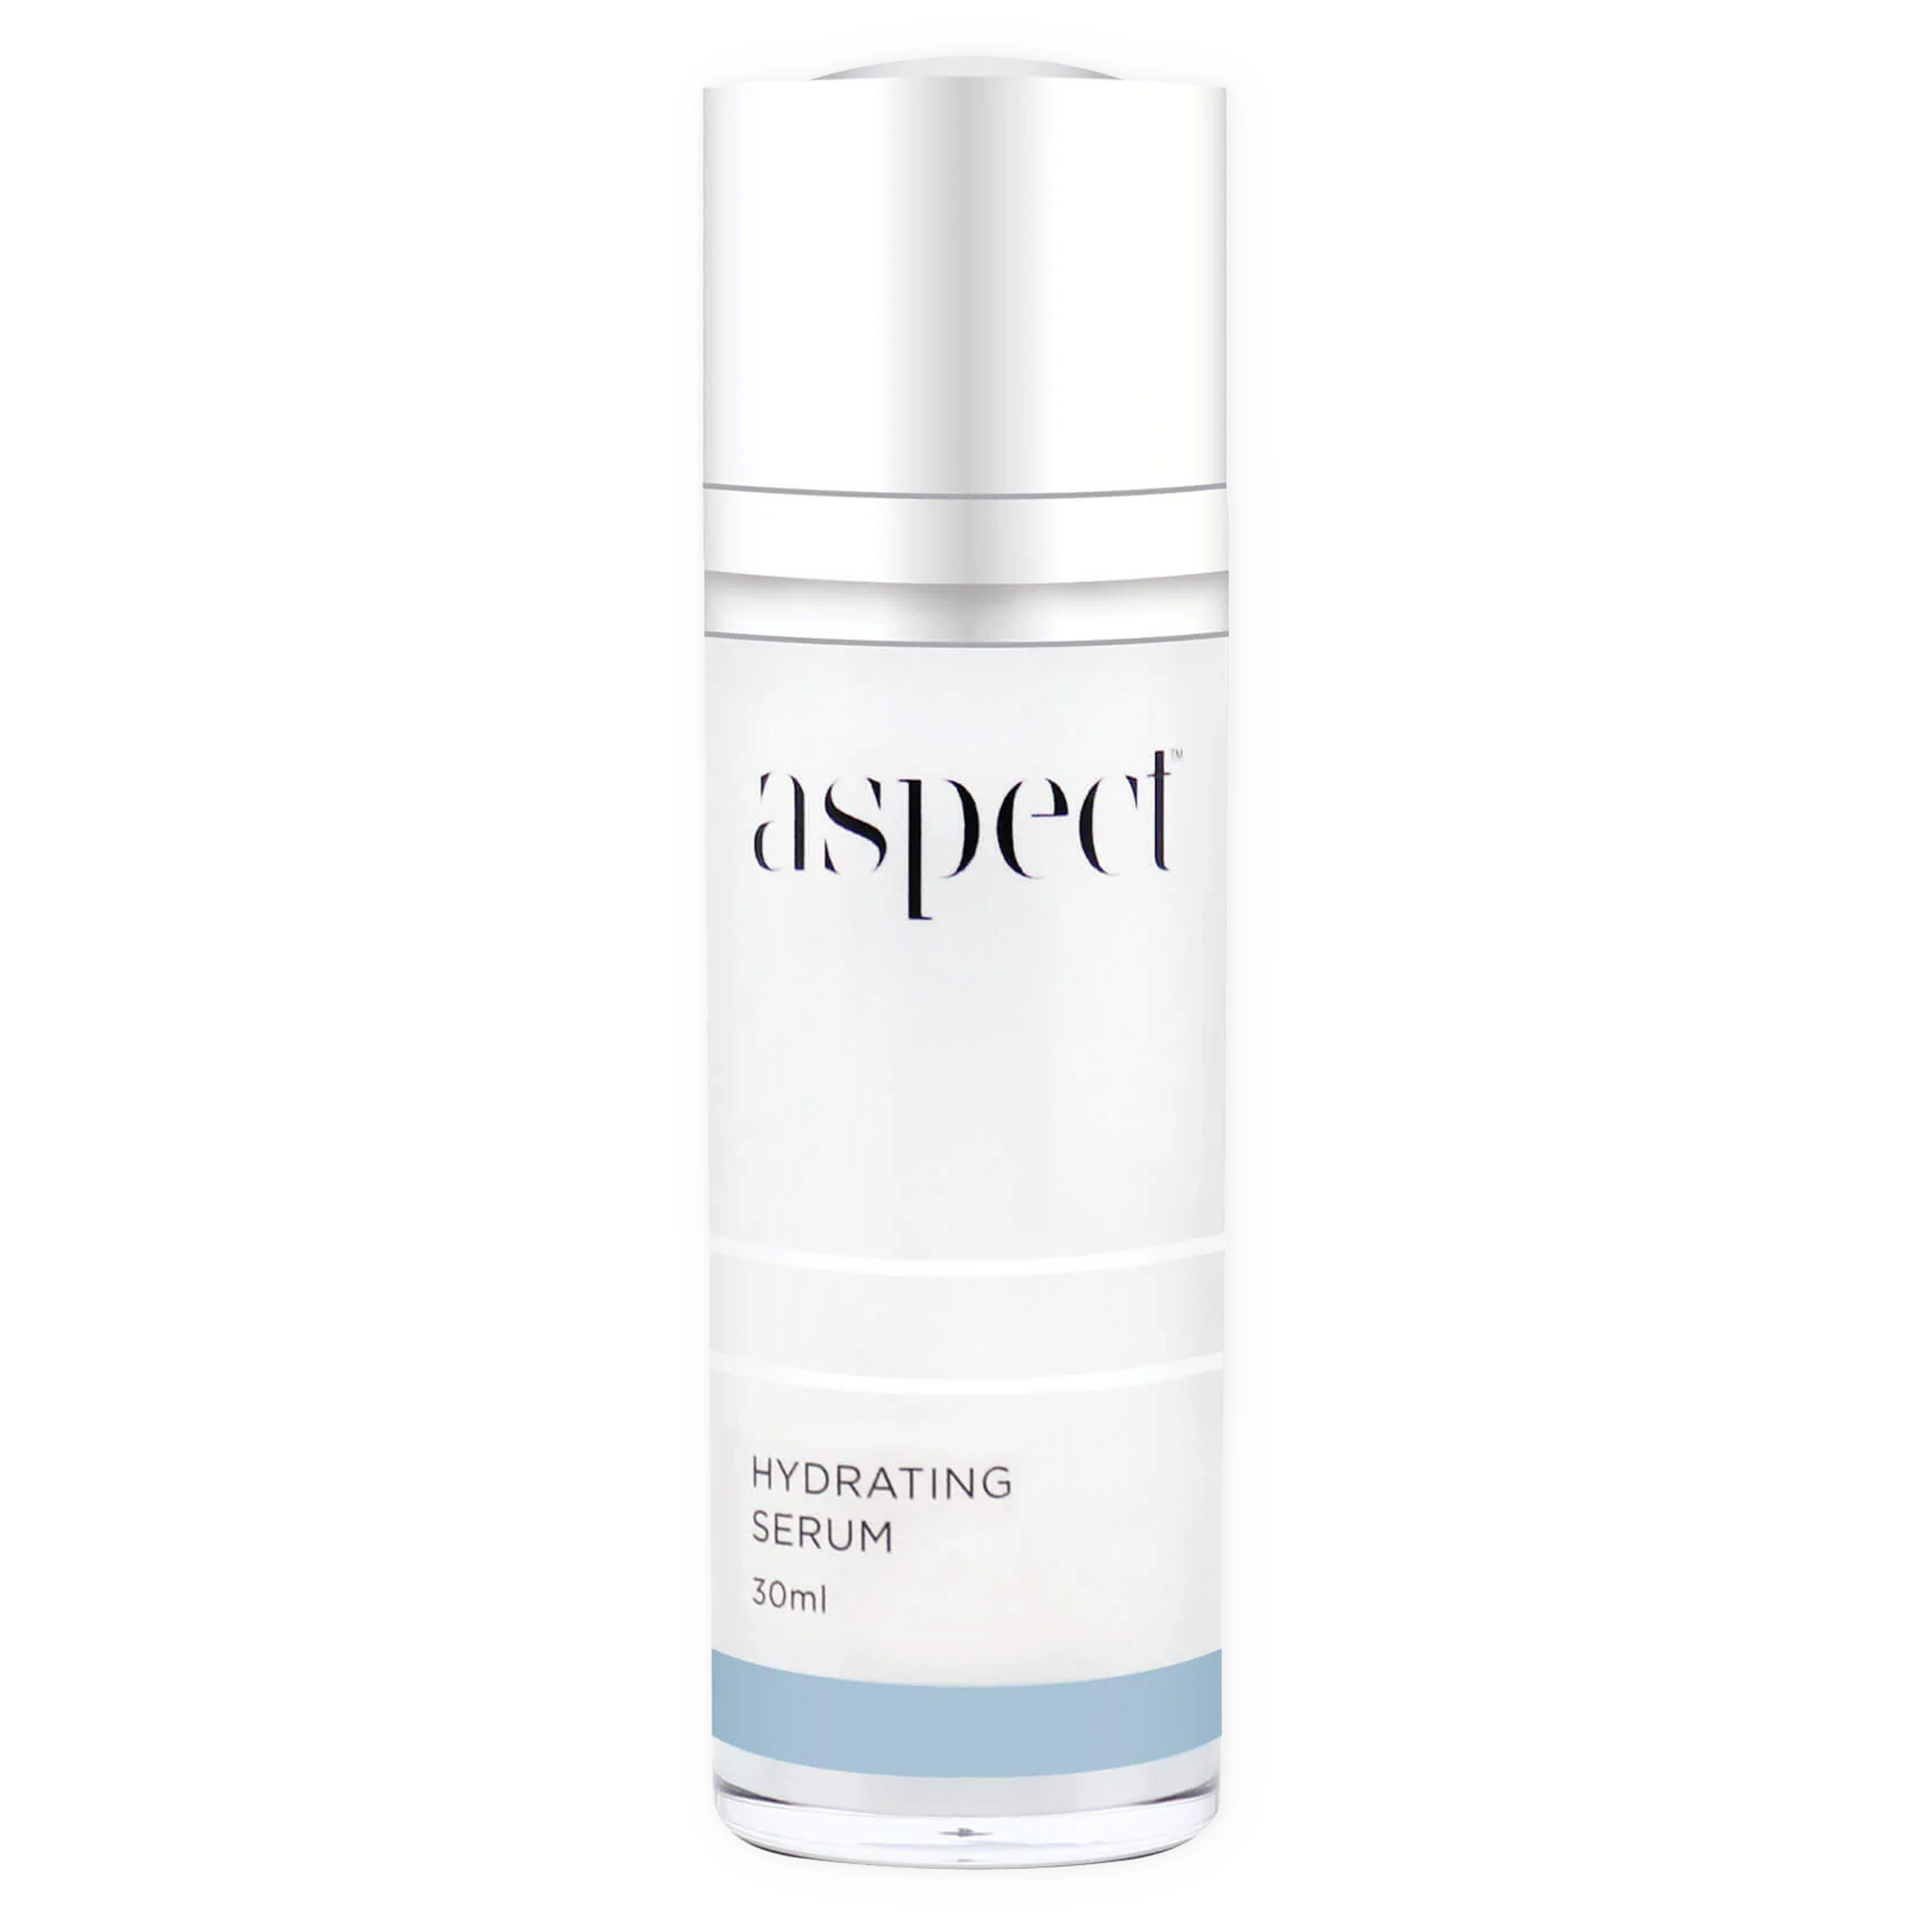 Aspect Hydrating Serum 30ml | Atone Skin